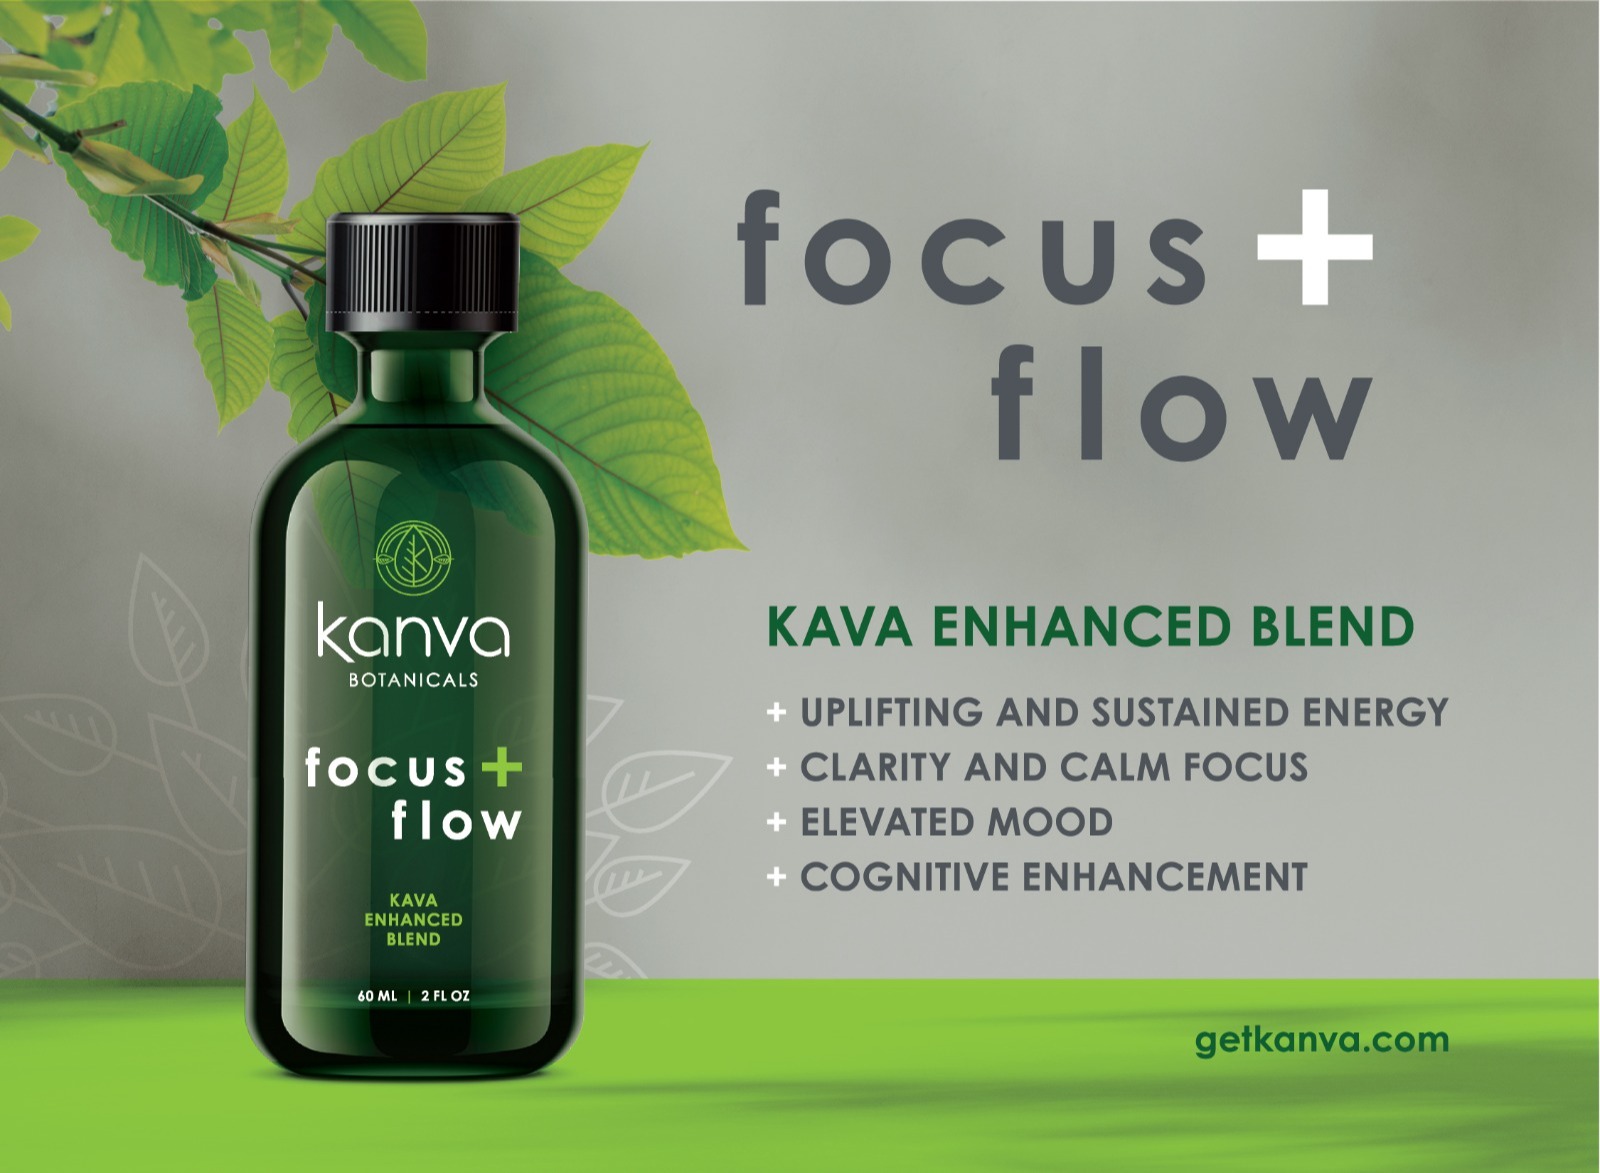 Kanva Botanicals "Focus + Flow" 1429